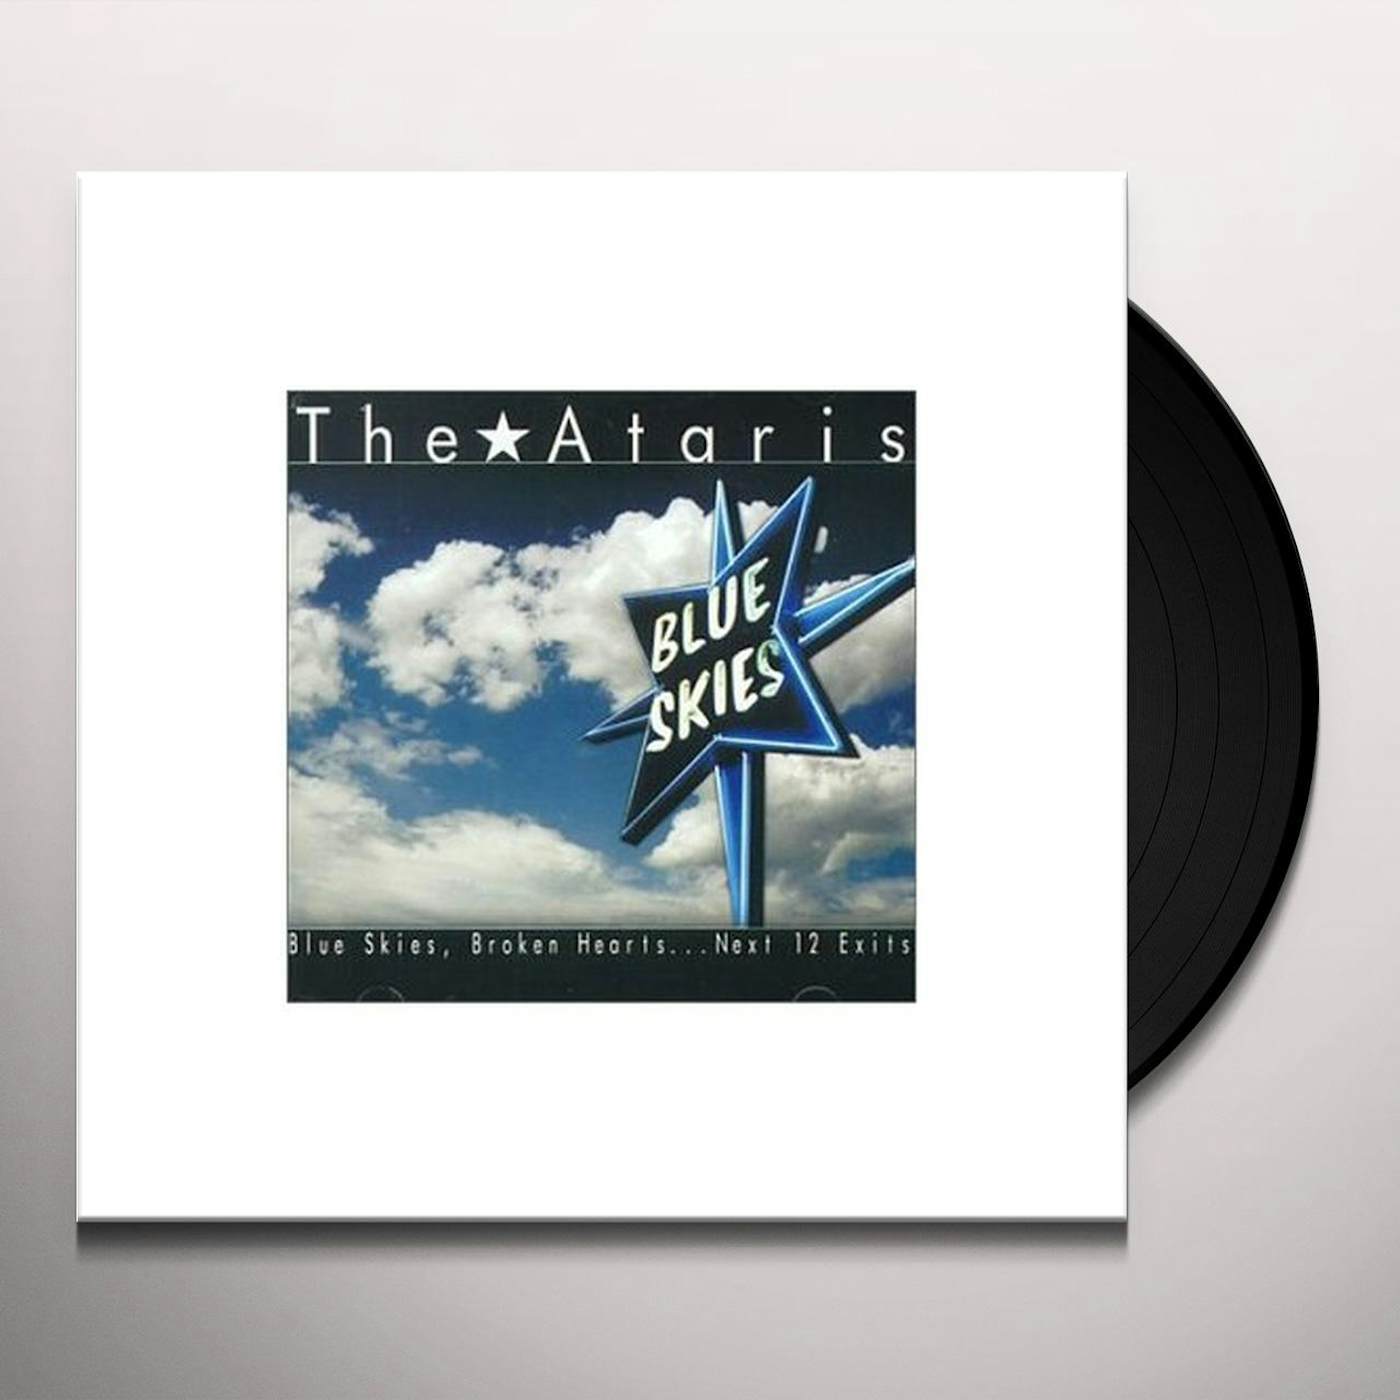 The Ataris BLUE SKIES BROKEN HEARTS: NEST 12 EXITS Vinyl Record